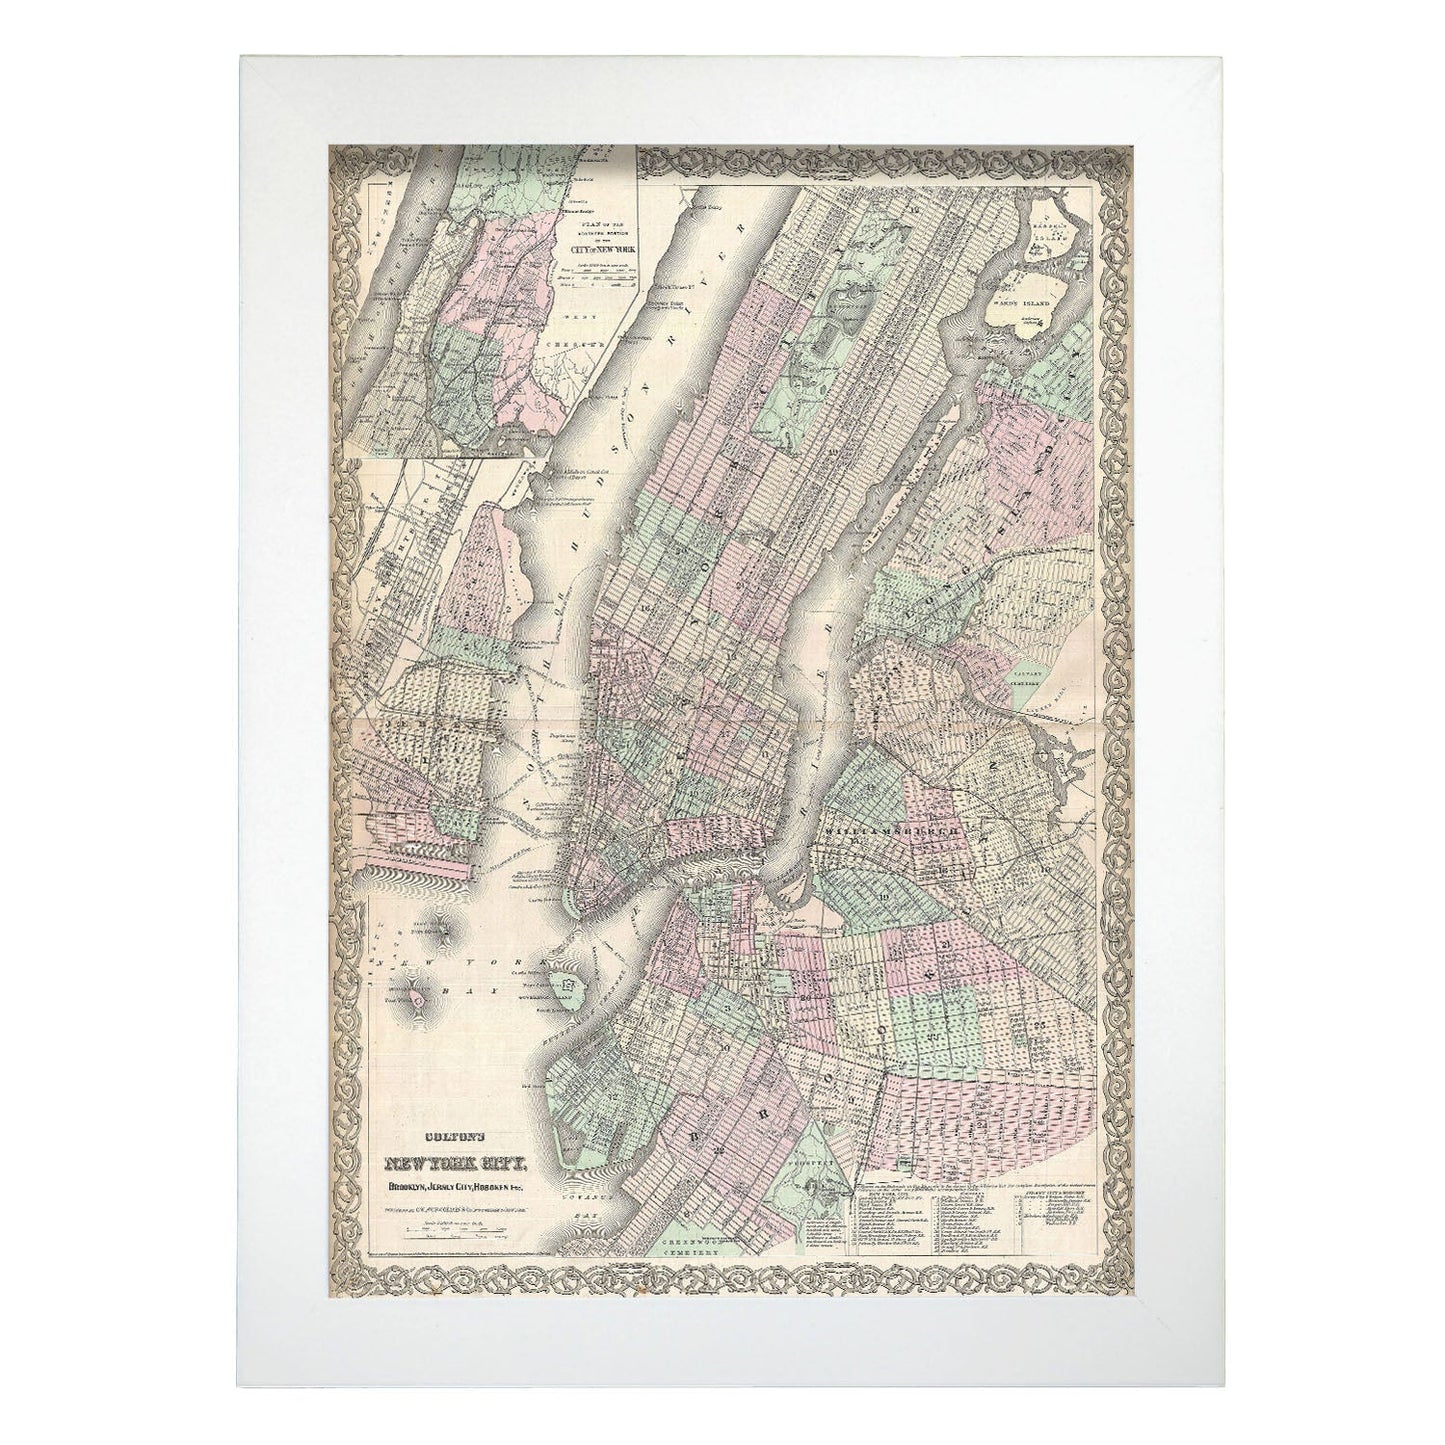 1865 Colton Map of New York City Manhattan Brooklyn Long Island City Geographicus NewYorkCity colton 1866-Artwork-Nacnic-A4-Marco Blanco-Nacnic Estudio SL